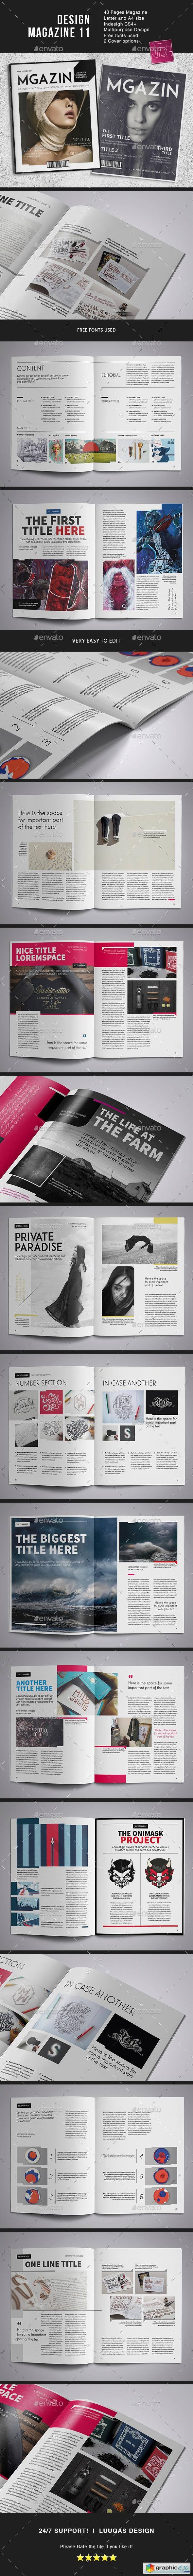 Design Magazine 11 Template